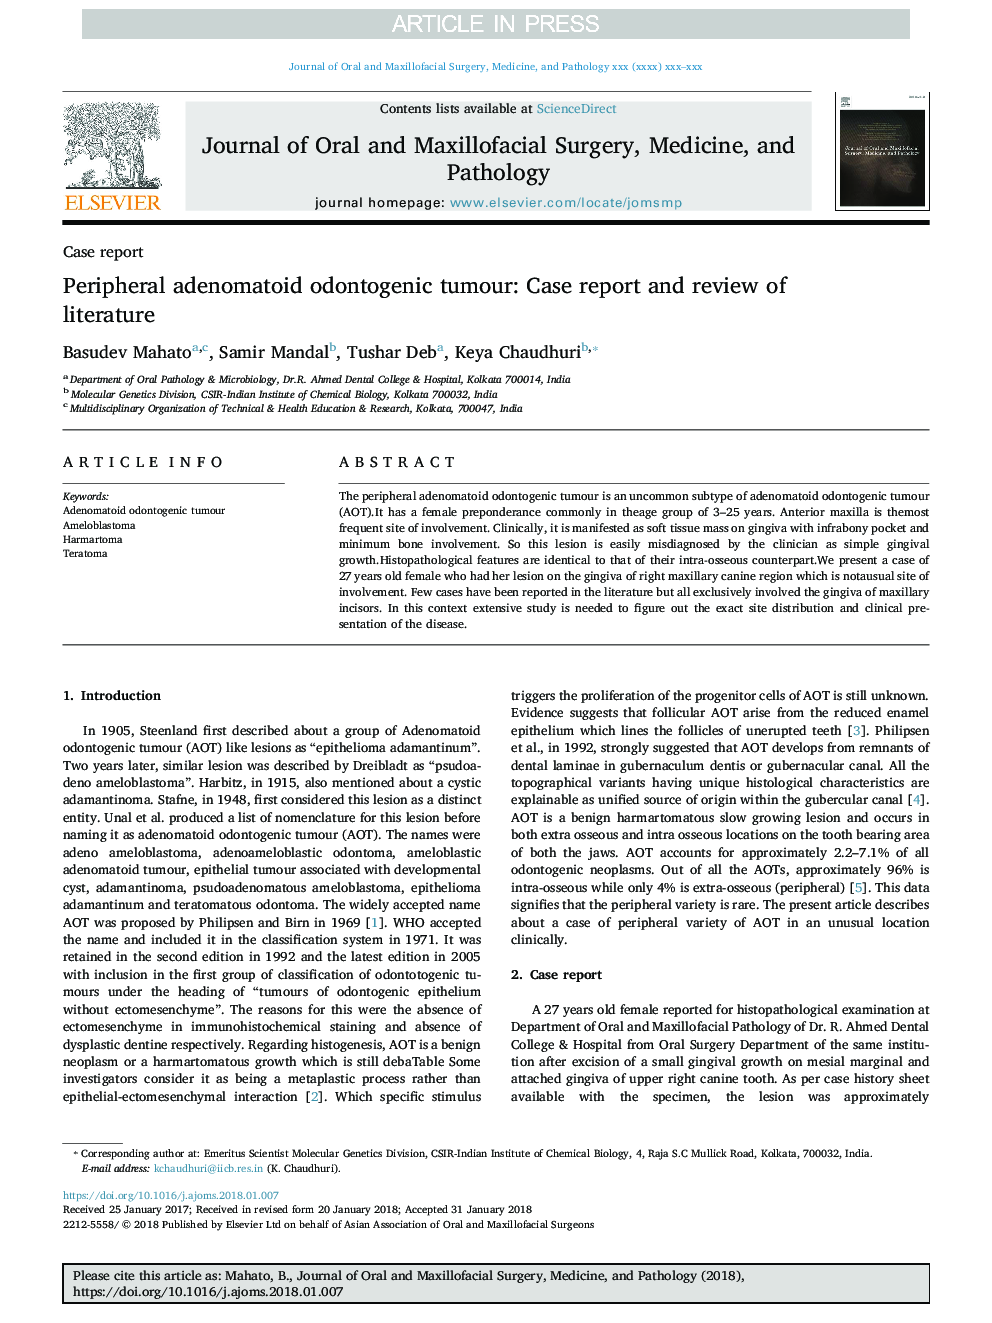 Peripheral adenomatoid odontogenic tumour: Case report and review of literature